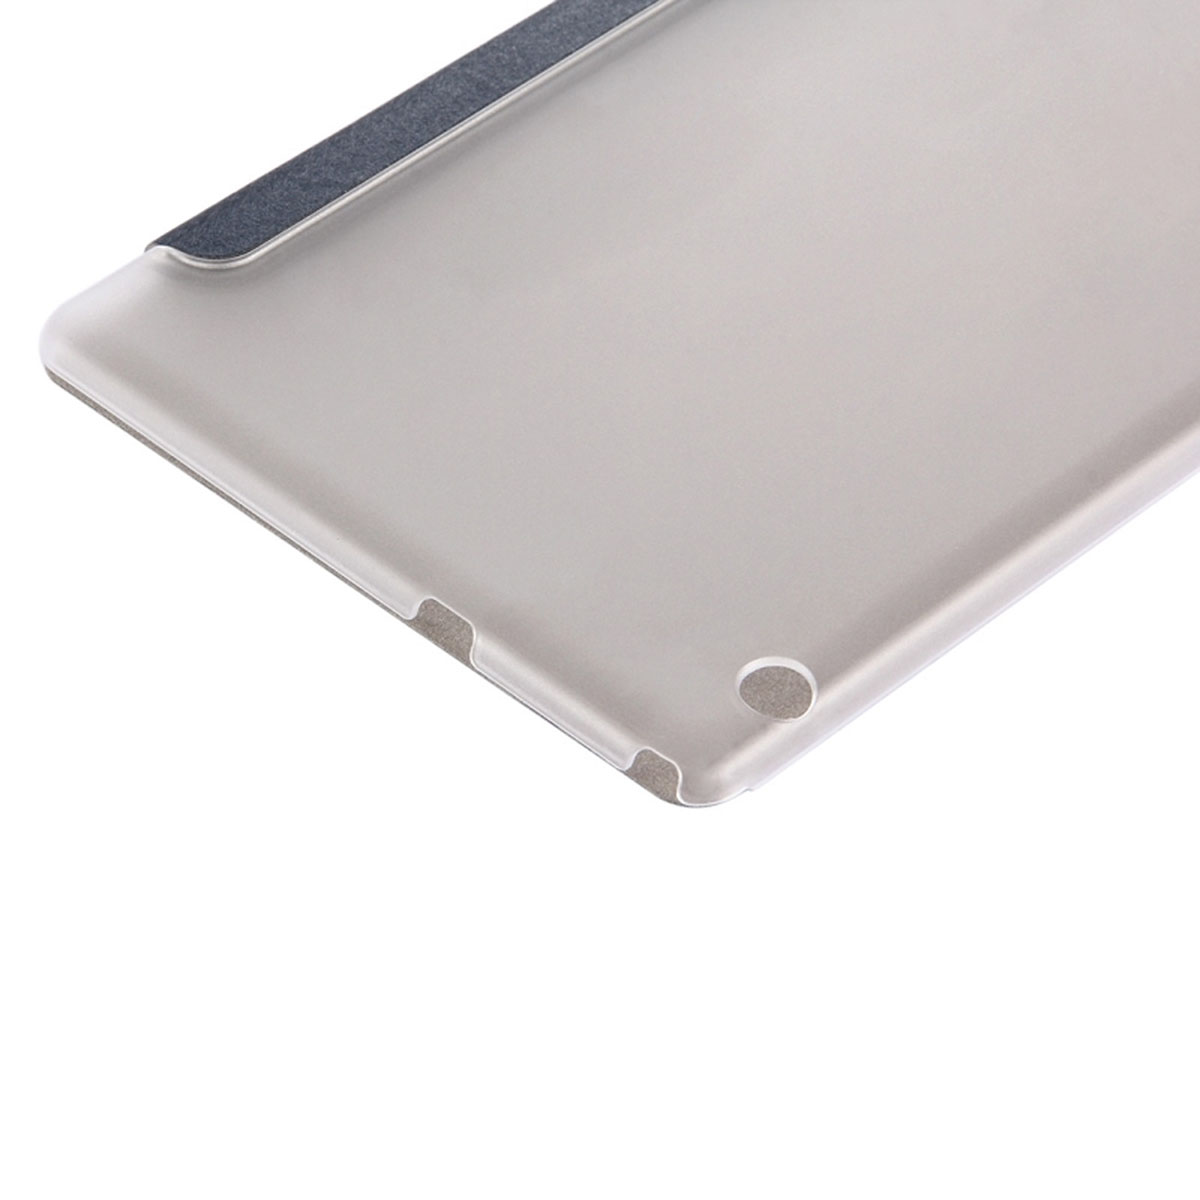 Чехол книжка Trans Cover для HUAWEI MediaPad T3 10, (AGS-L09), диагональ 9.6", цвет синий